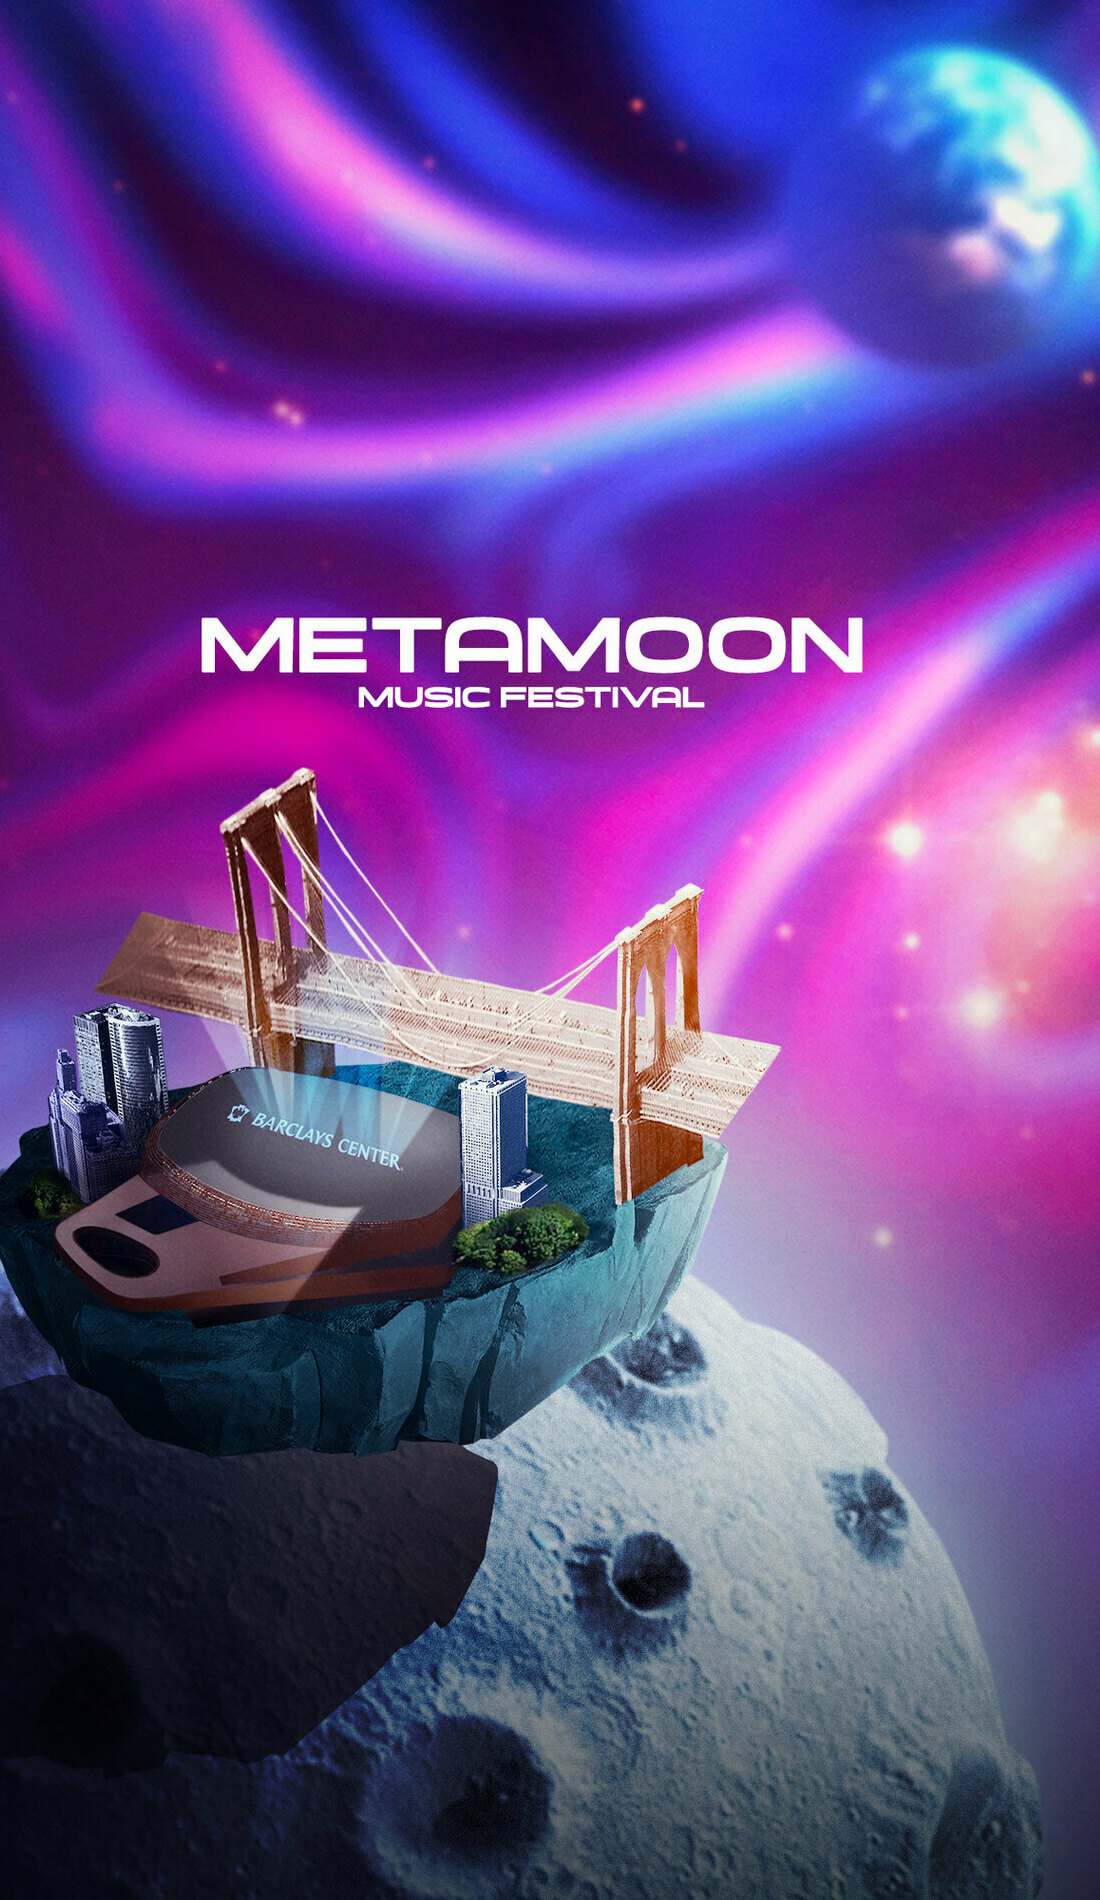 A MetaMoon Festival live event